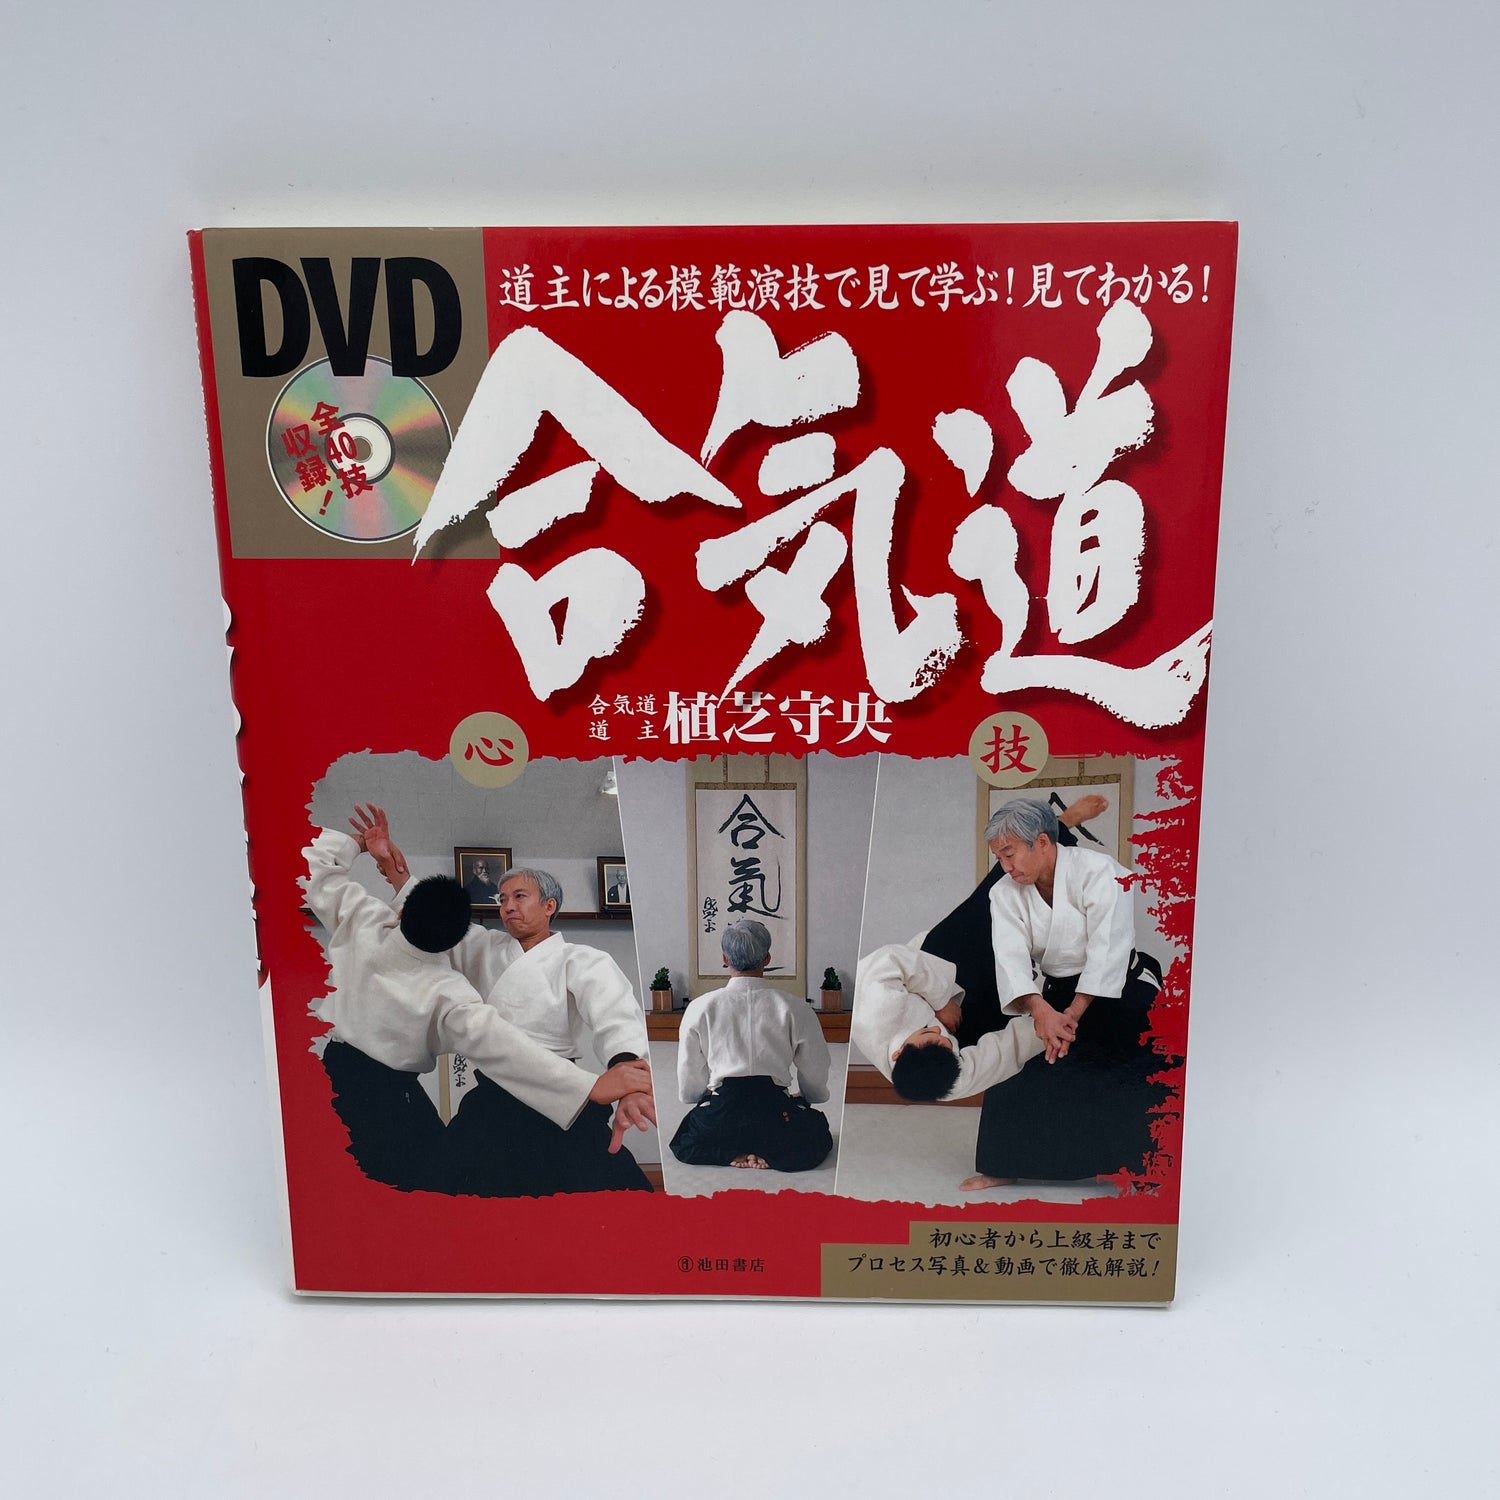 Learn Aikido by Watching Book & DVD by Moriteru Ueshiba (Region 2 DVD) (Preowned)